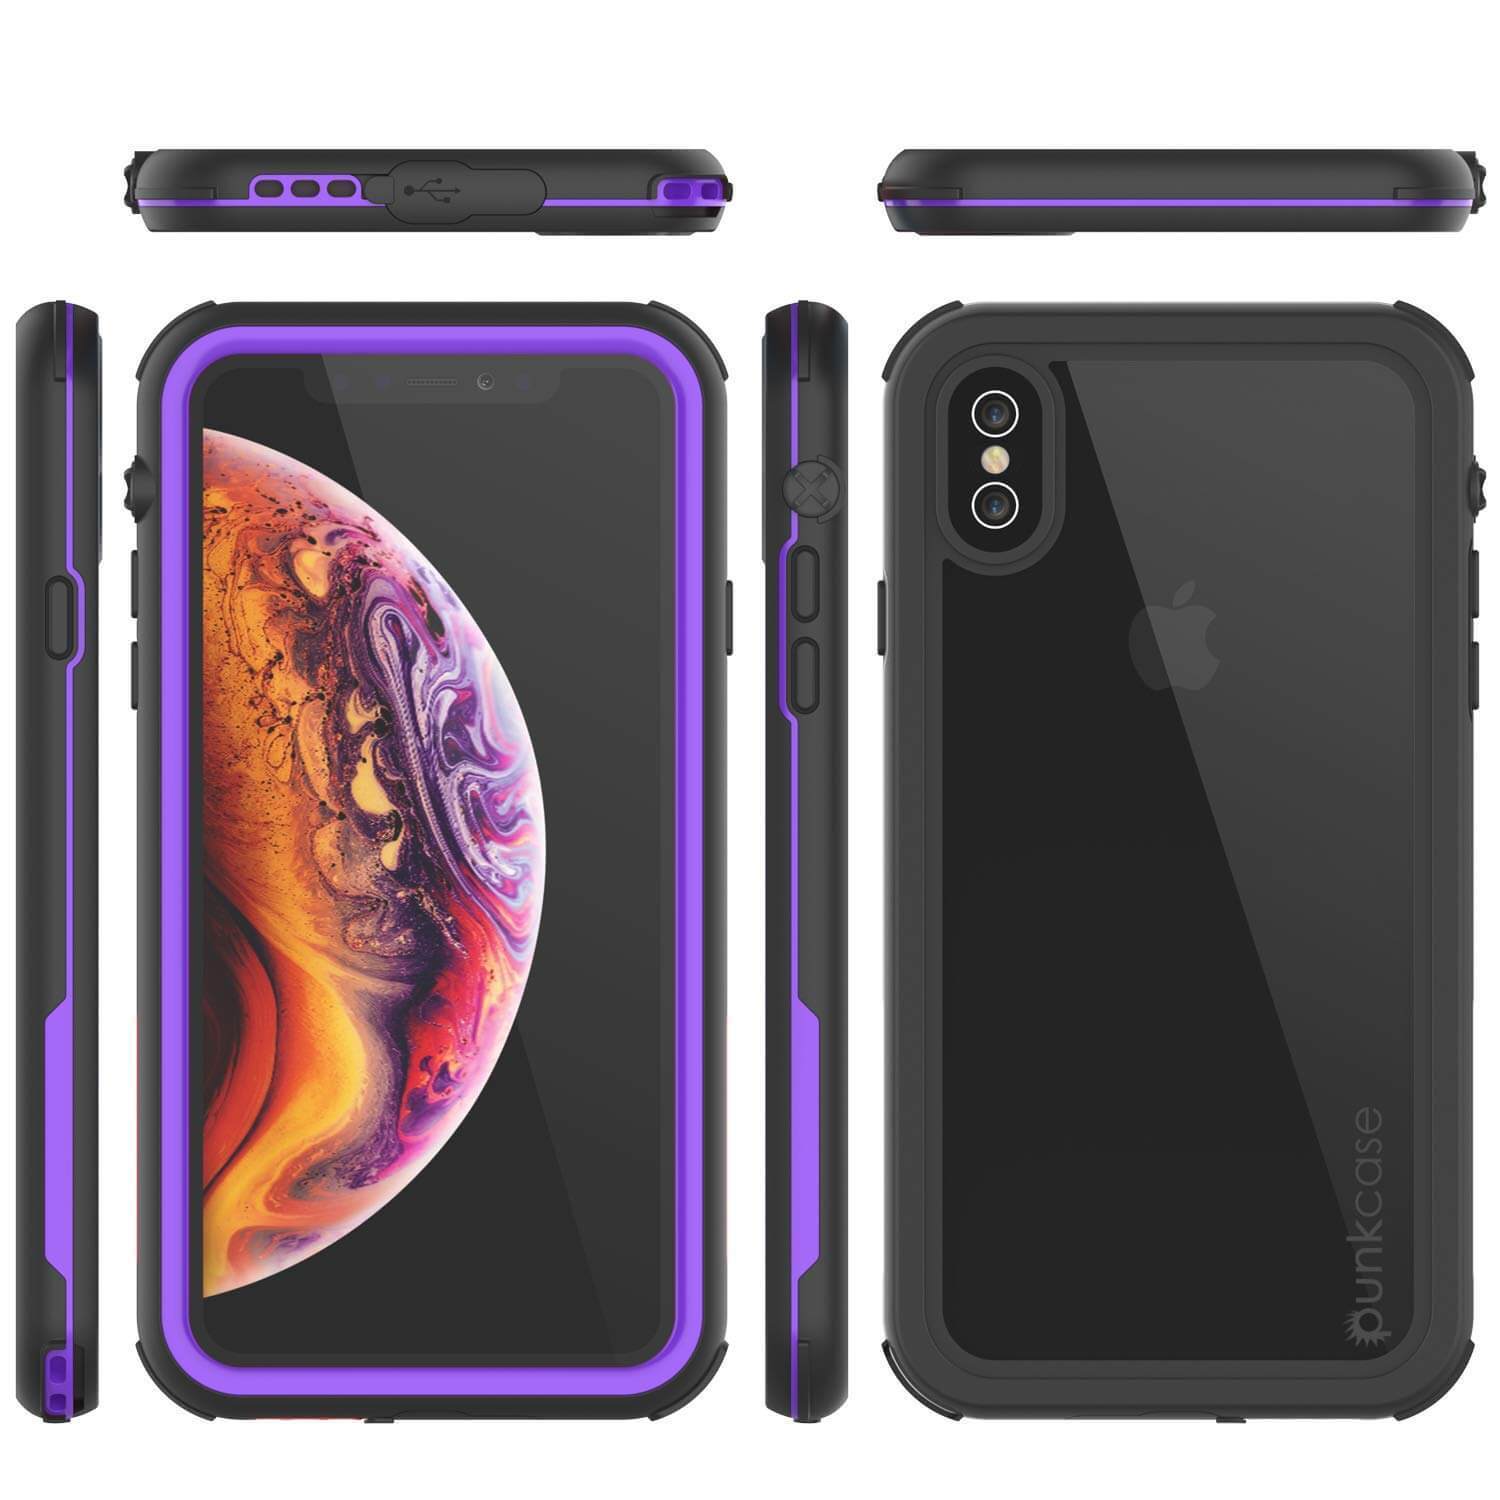 iPhone XS Max Waterproof IP68 Case, Punkcase [Purple] [Rapture Series]  W/Built in Screen Protector